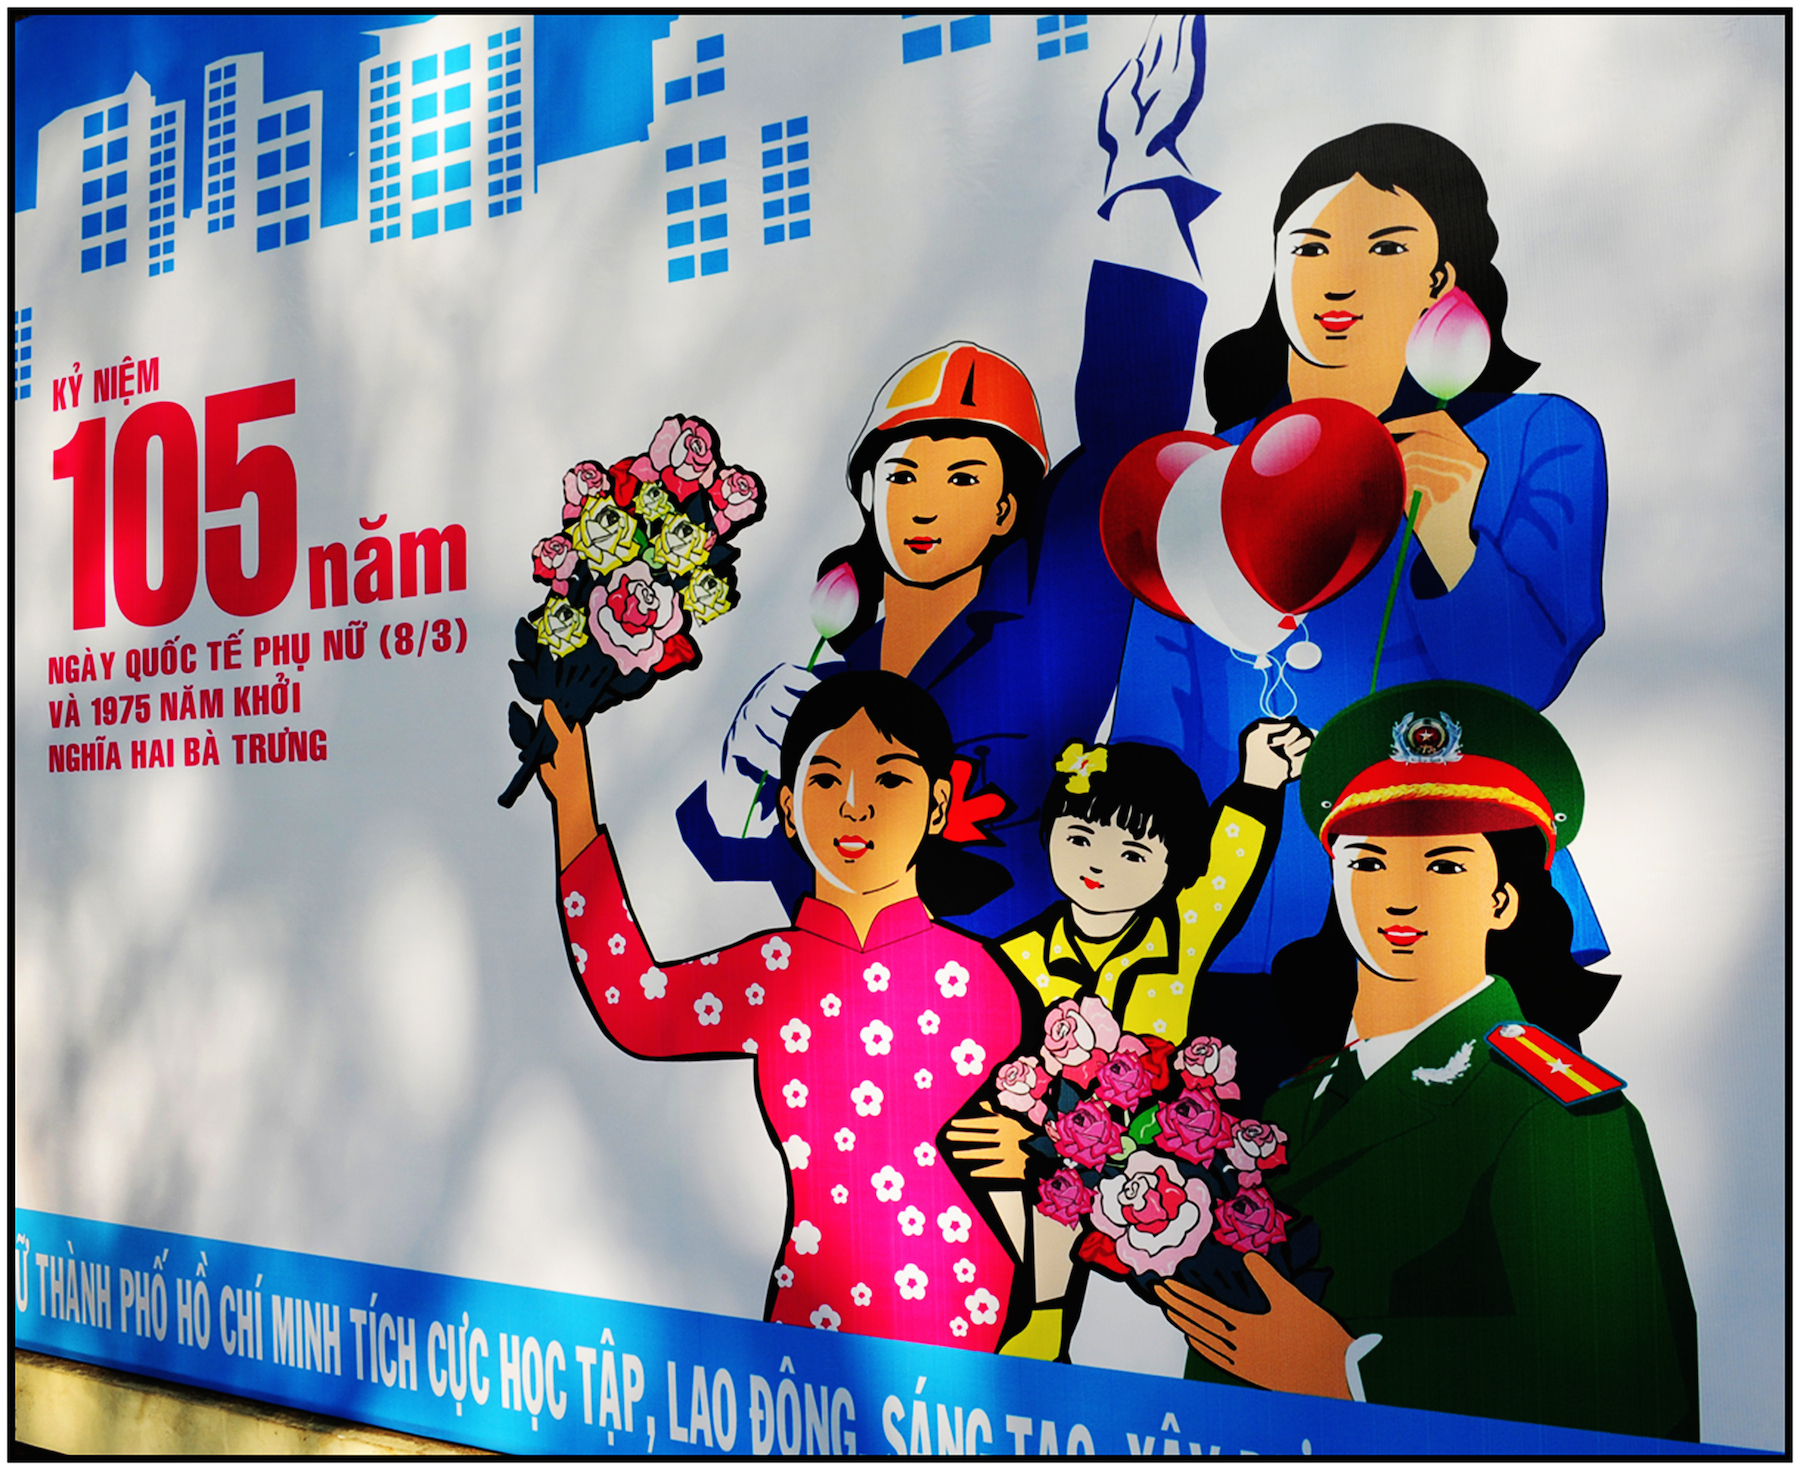  Vietnamese Communist Party poster promotes women as vital contributors to society, Saigon/HCMC, Dec. 2015. #1612 